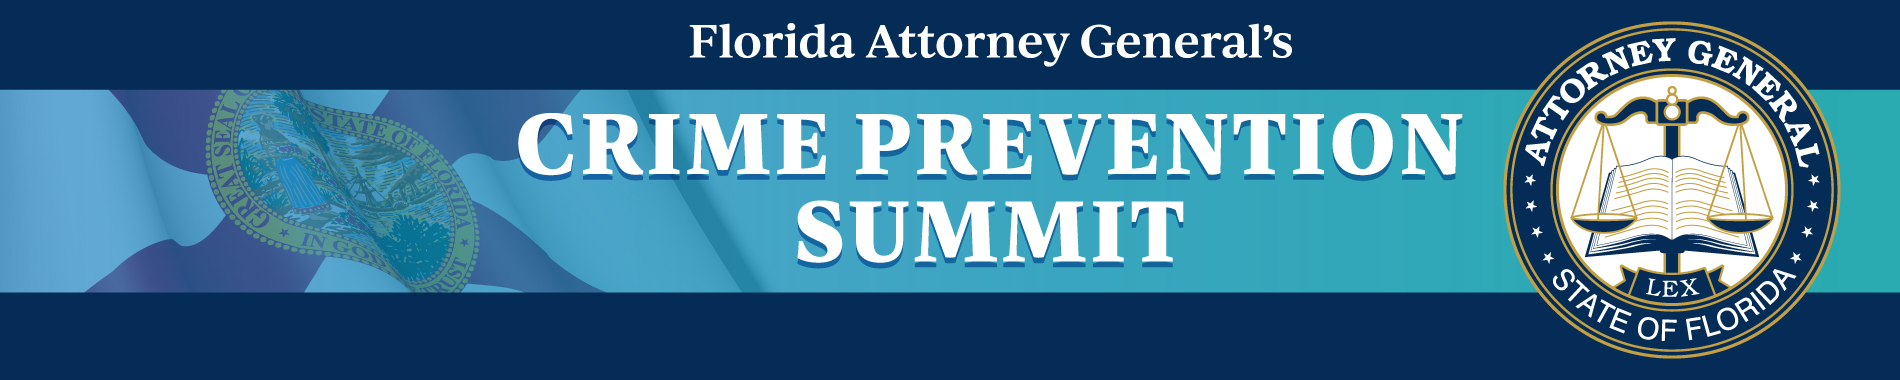 Florida Attorney General's Crime Prevention Summit